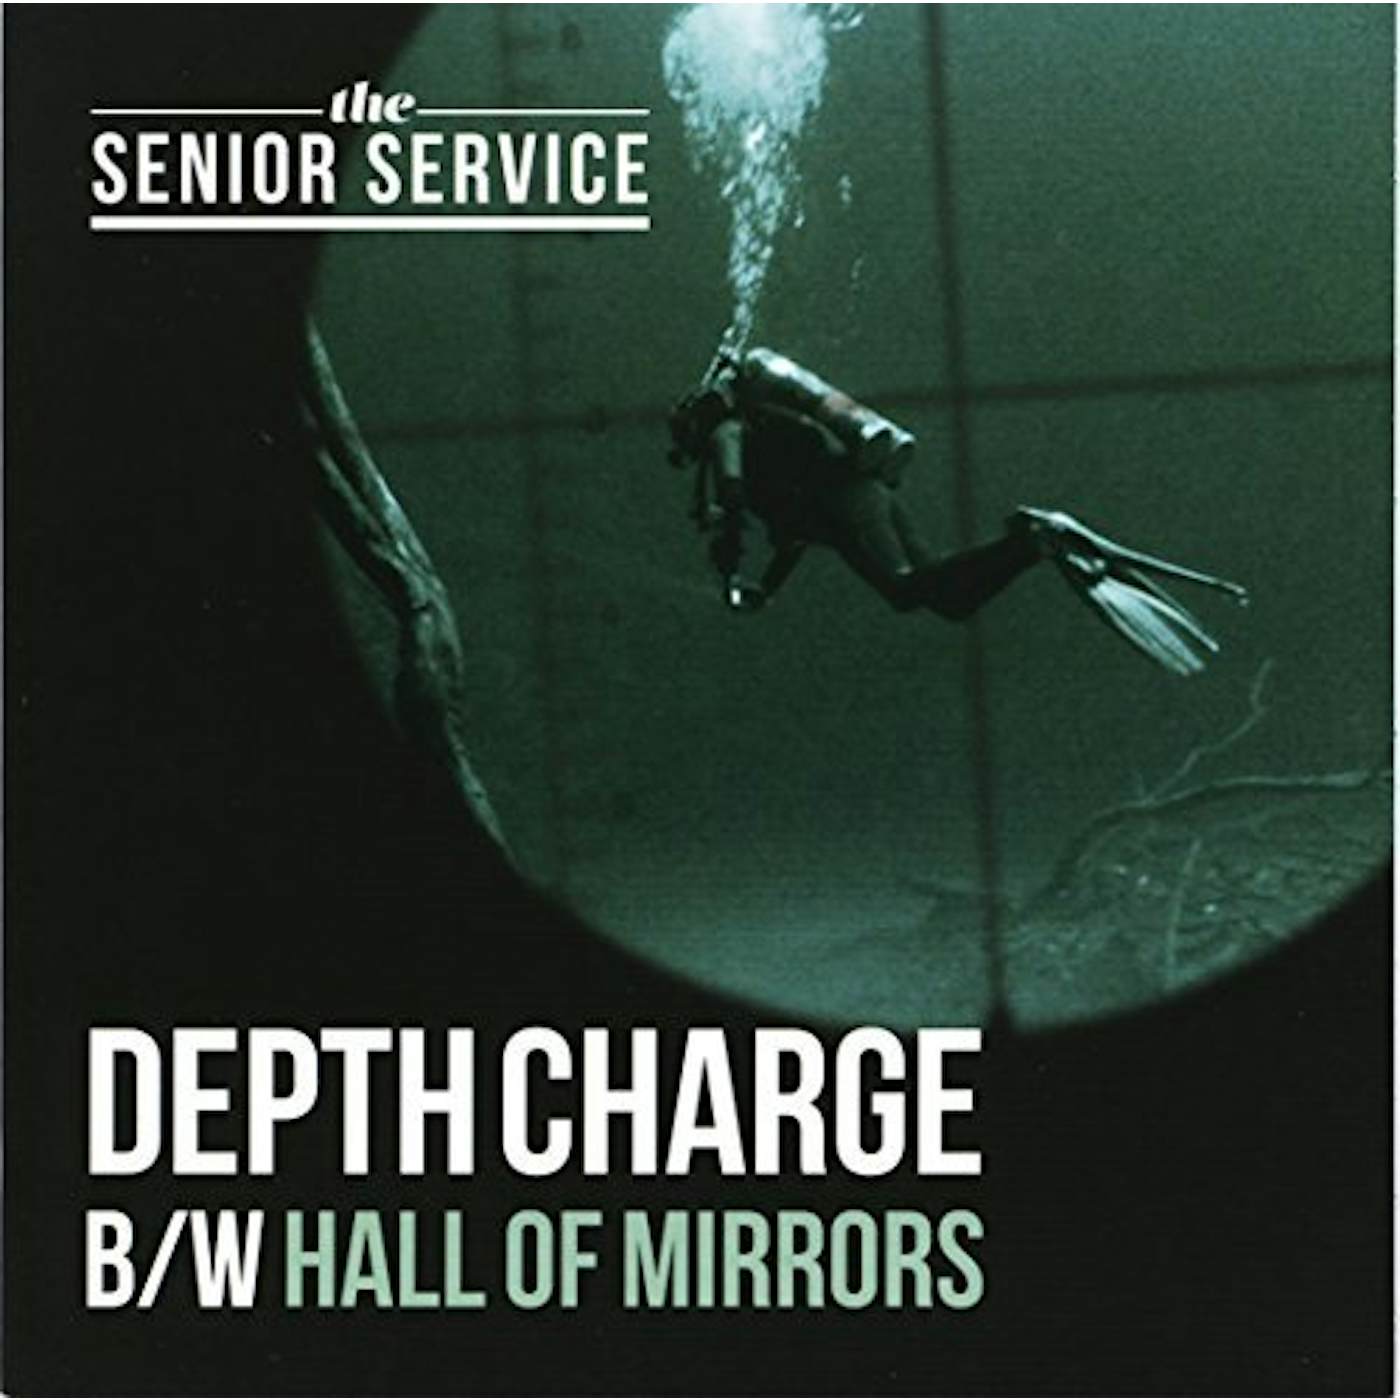 The Senior Service DEPTH CHARGE Vinyl Record